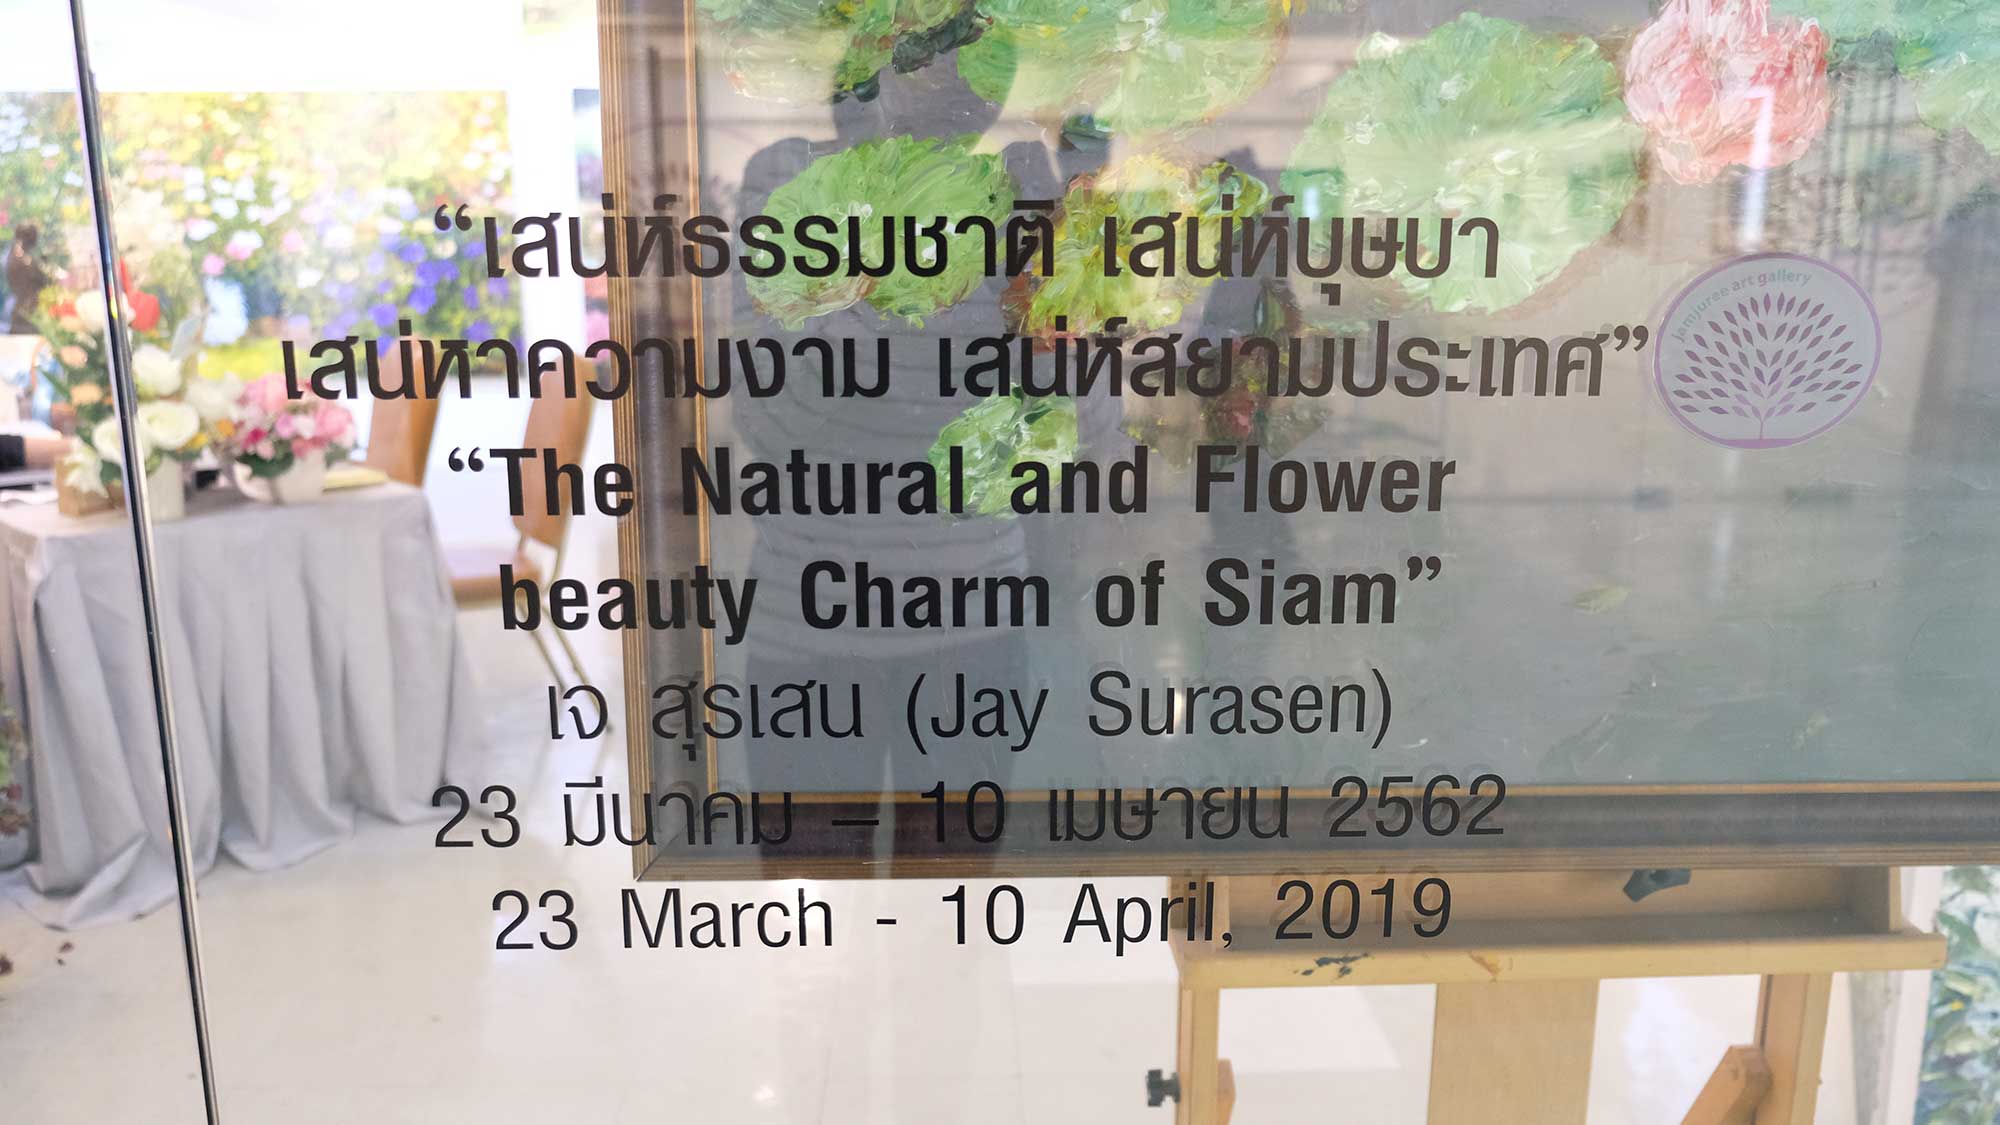 The Natural and Flower beauty Charm of Siam By Jay Surasen | นิทรรศการ เสน่ห์ธรรมชาติ เสน่ห์บุษบา เสน่หาความงาม เสน่ห์สยามประเทศ โดย เจ สุรเสน